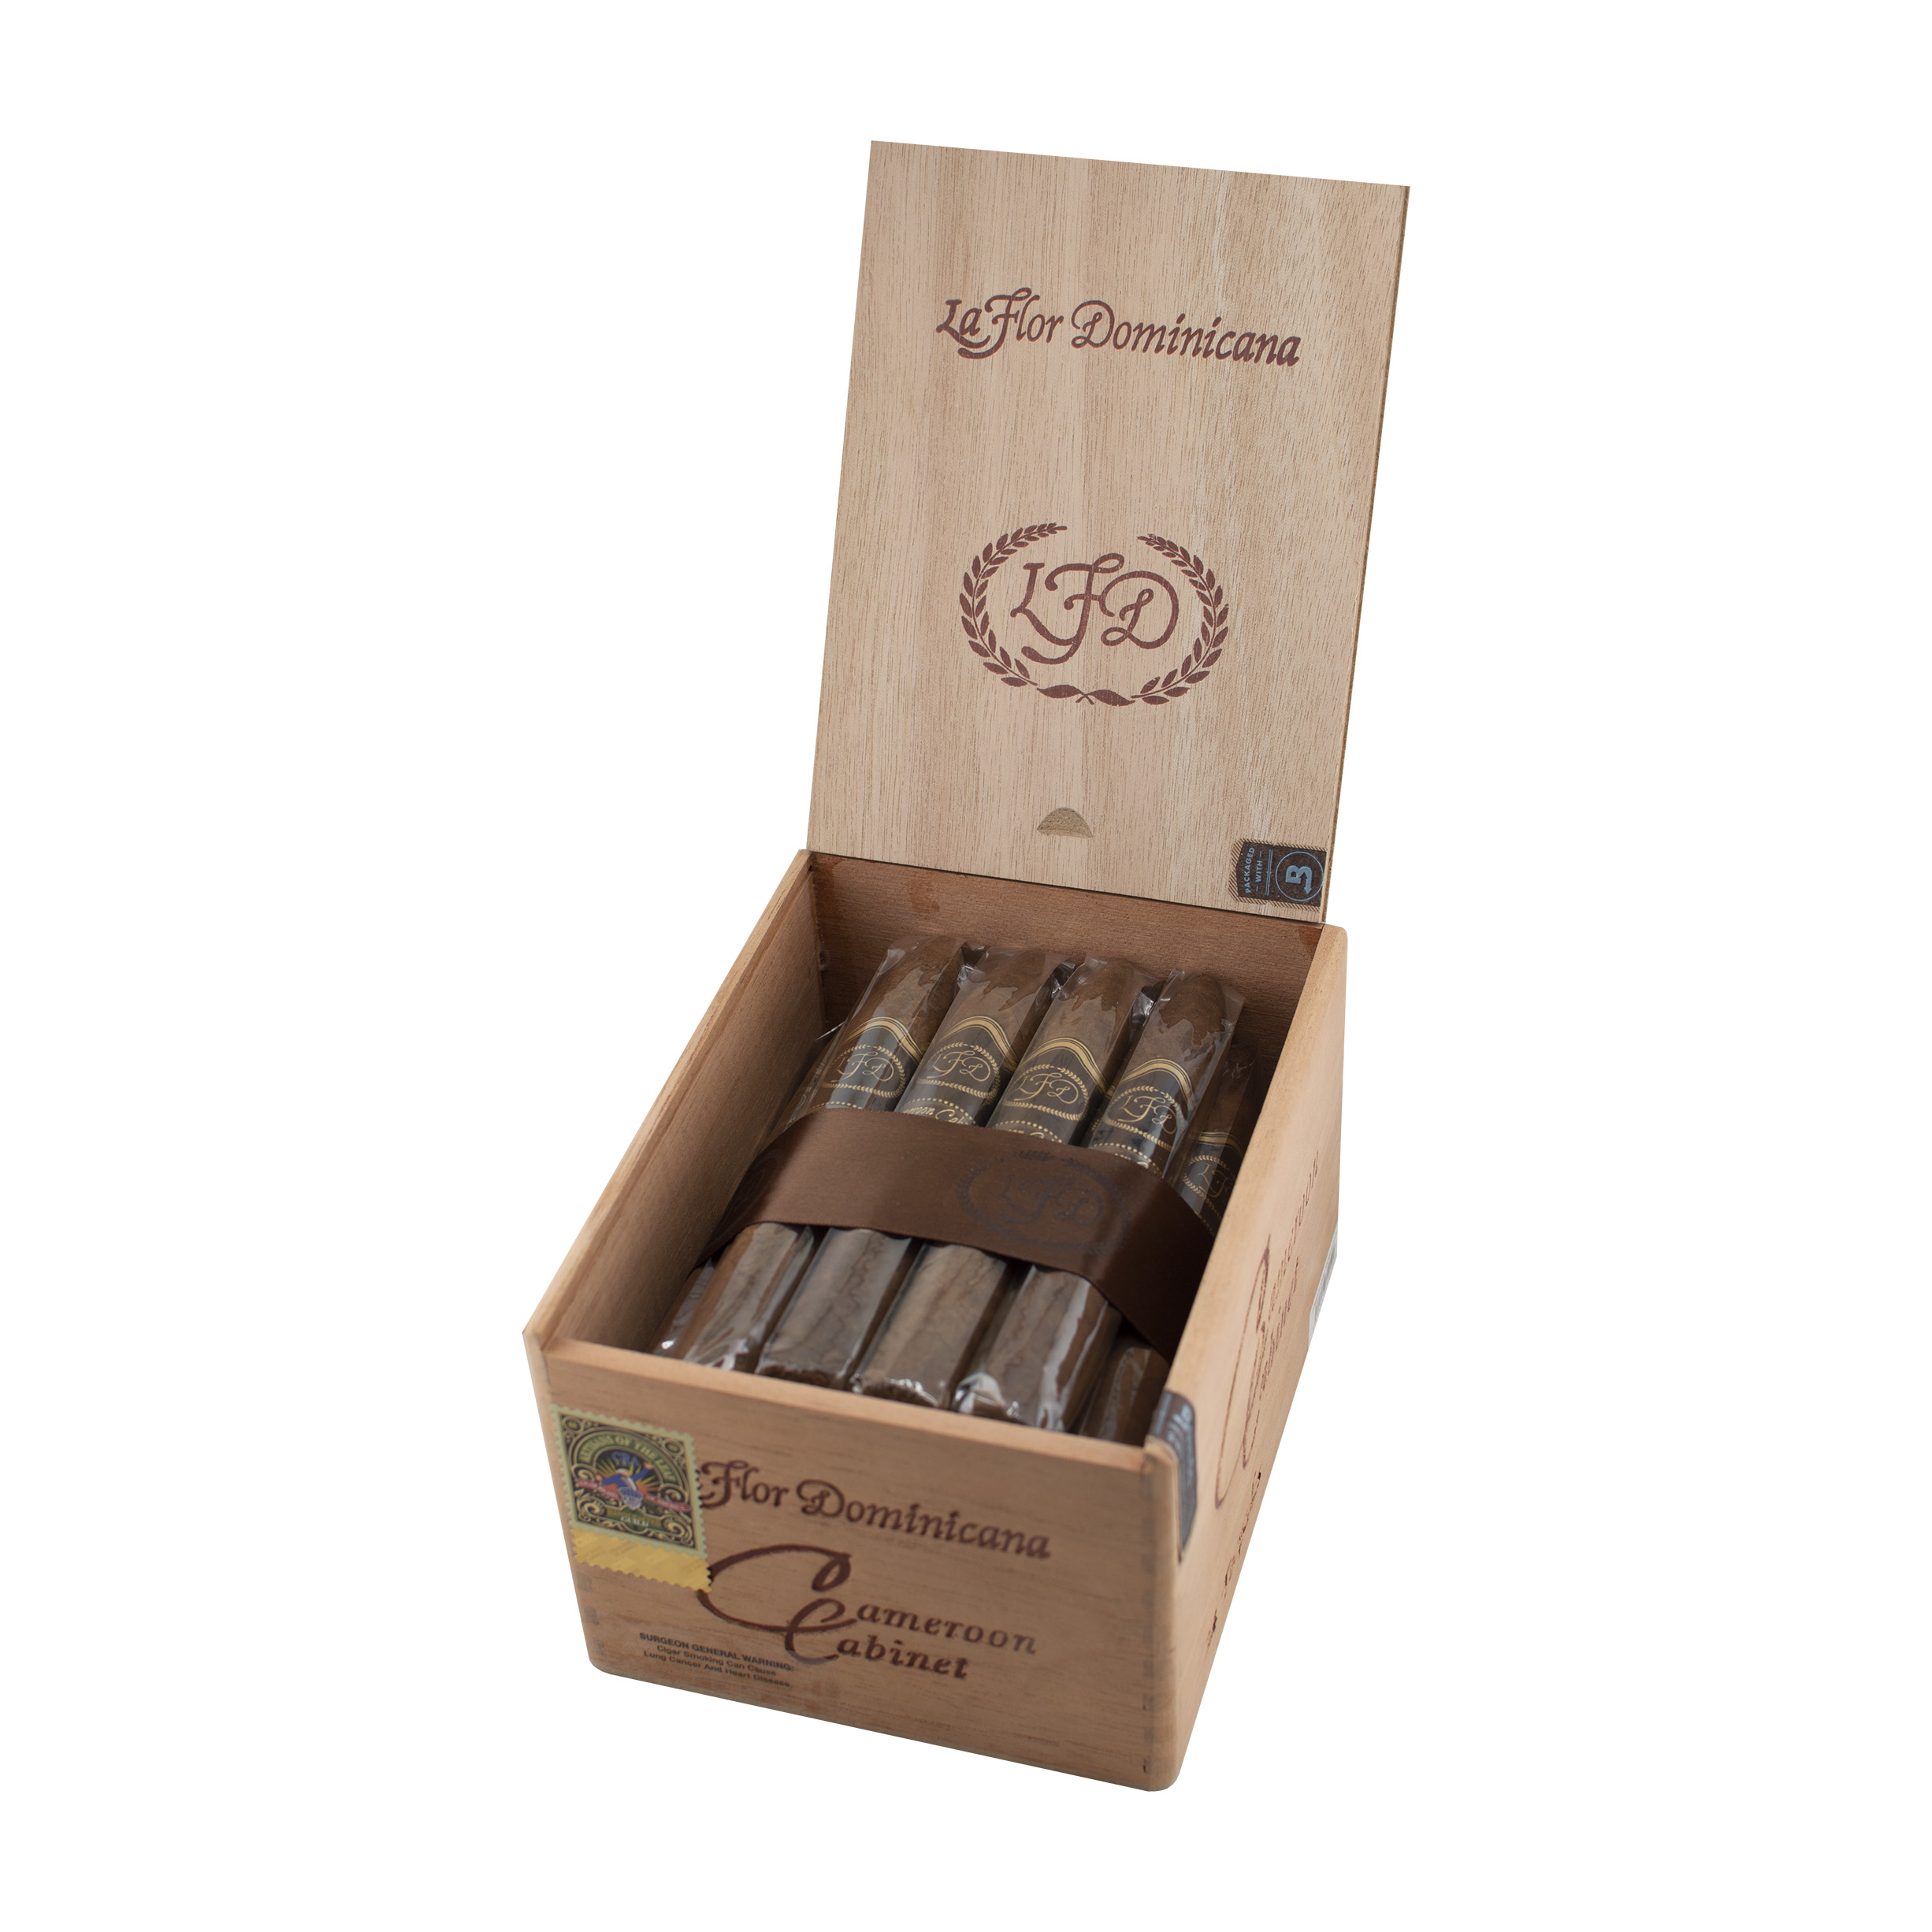 LFD Cameroon Cabinet Torpedo Cigar - Box